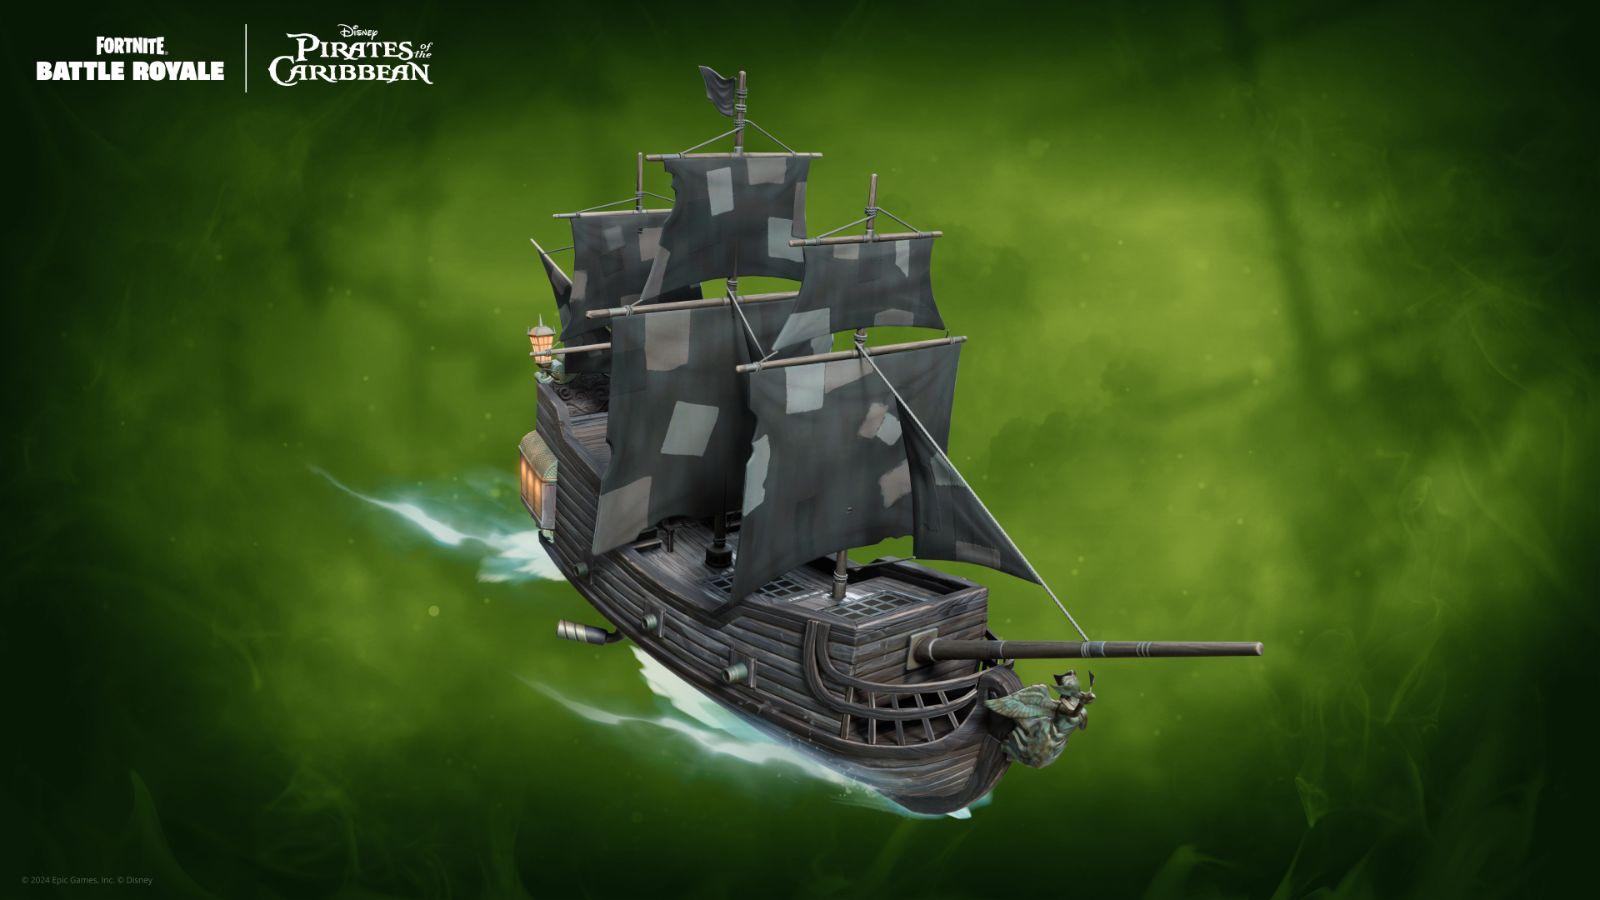 Jack's Ship Glider promo art from Epic Games for Fortnite